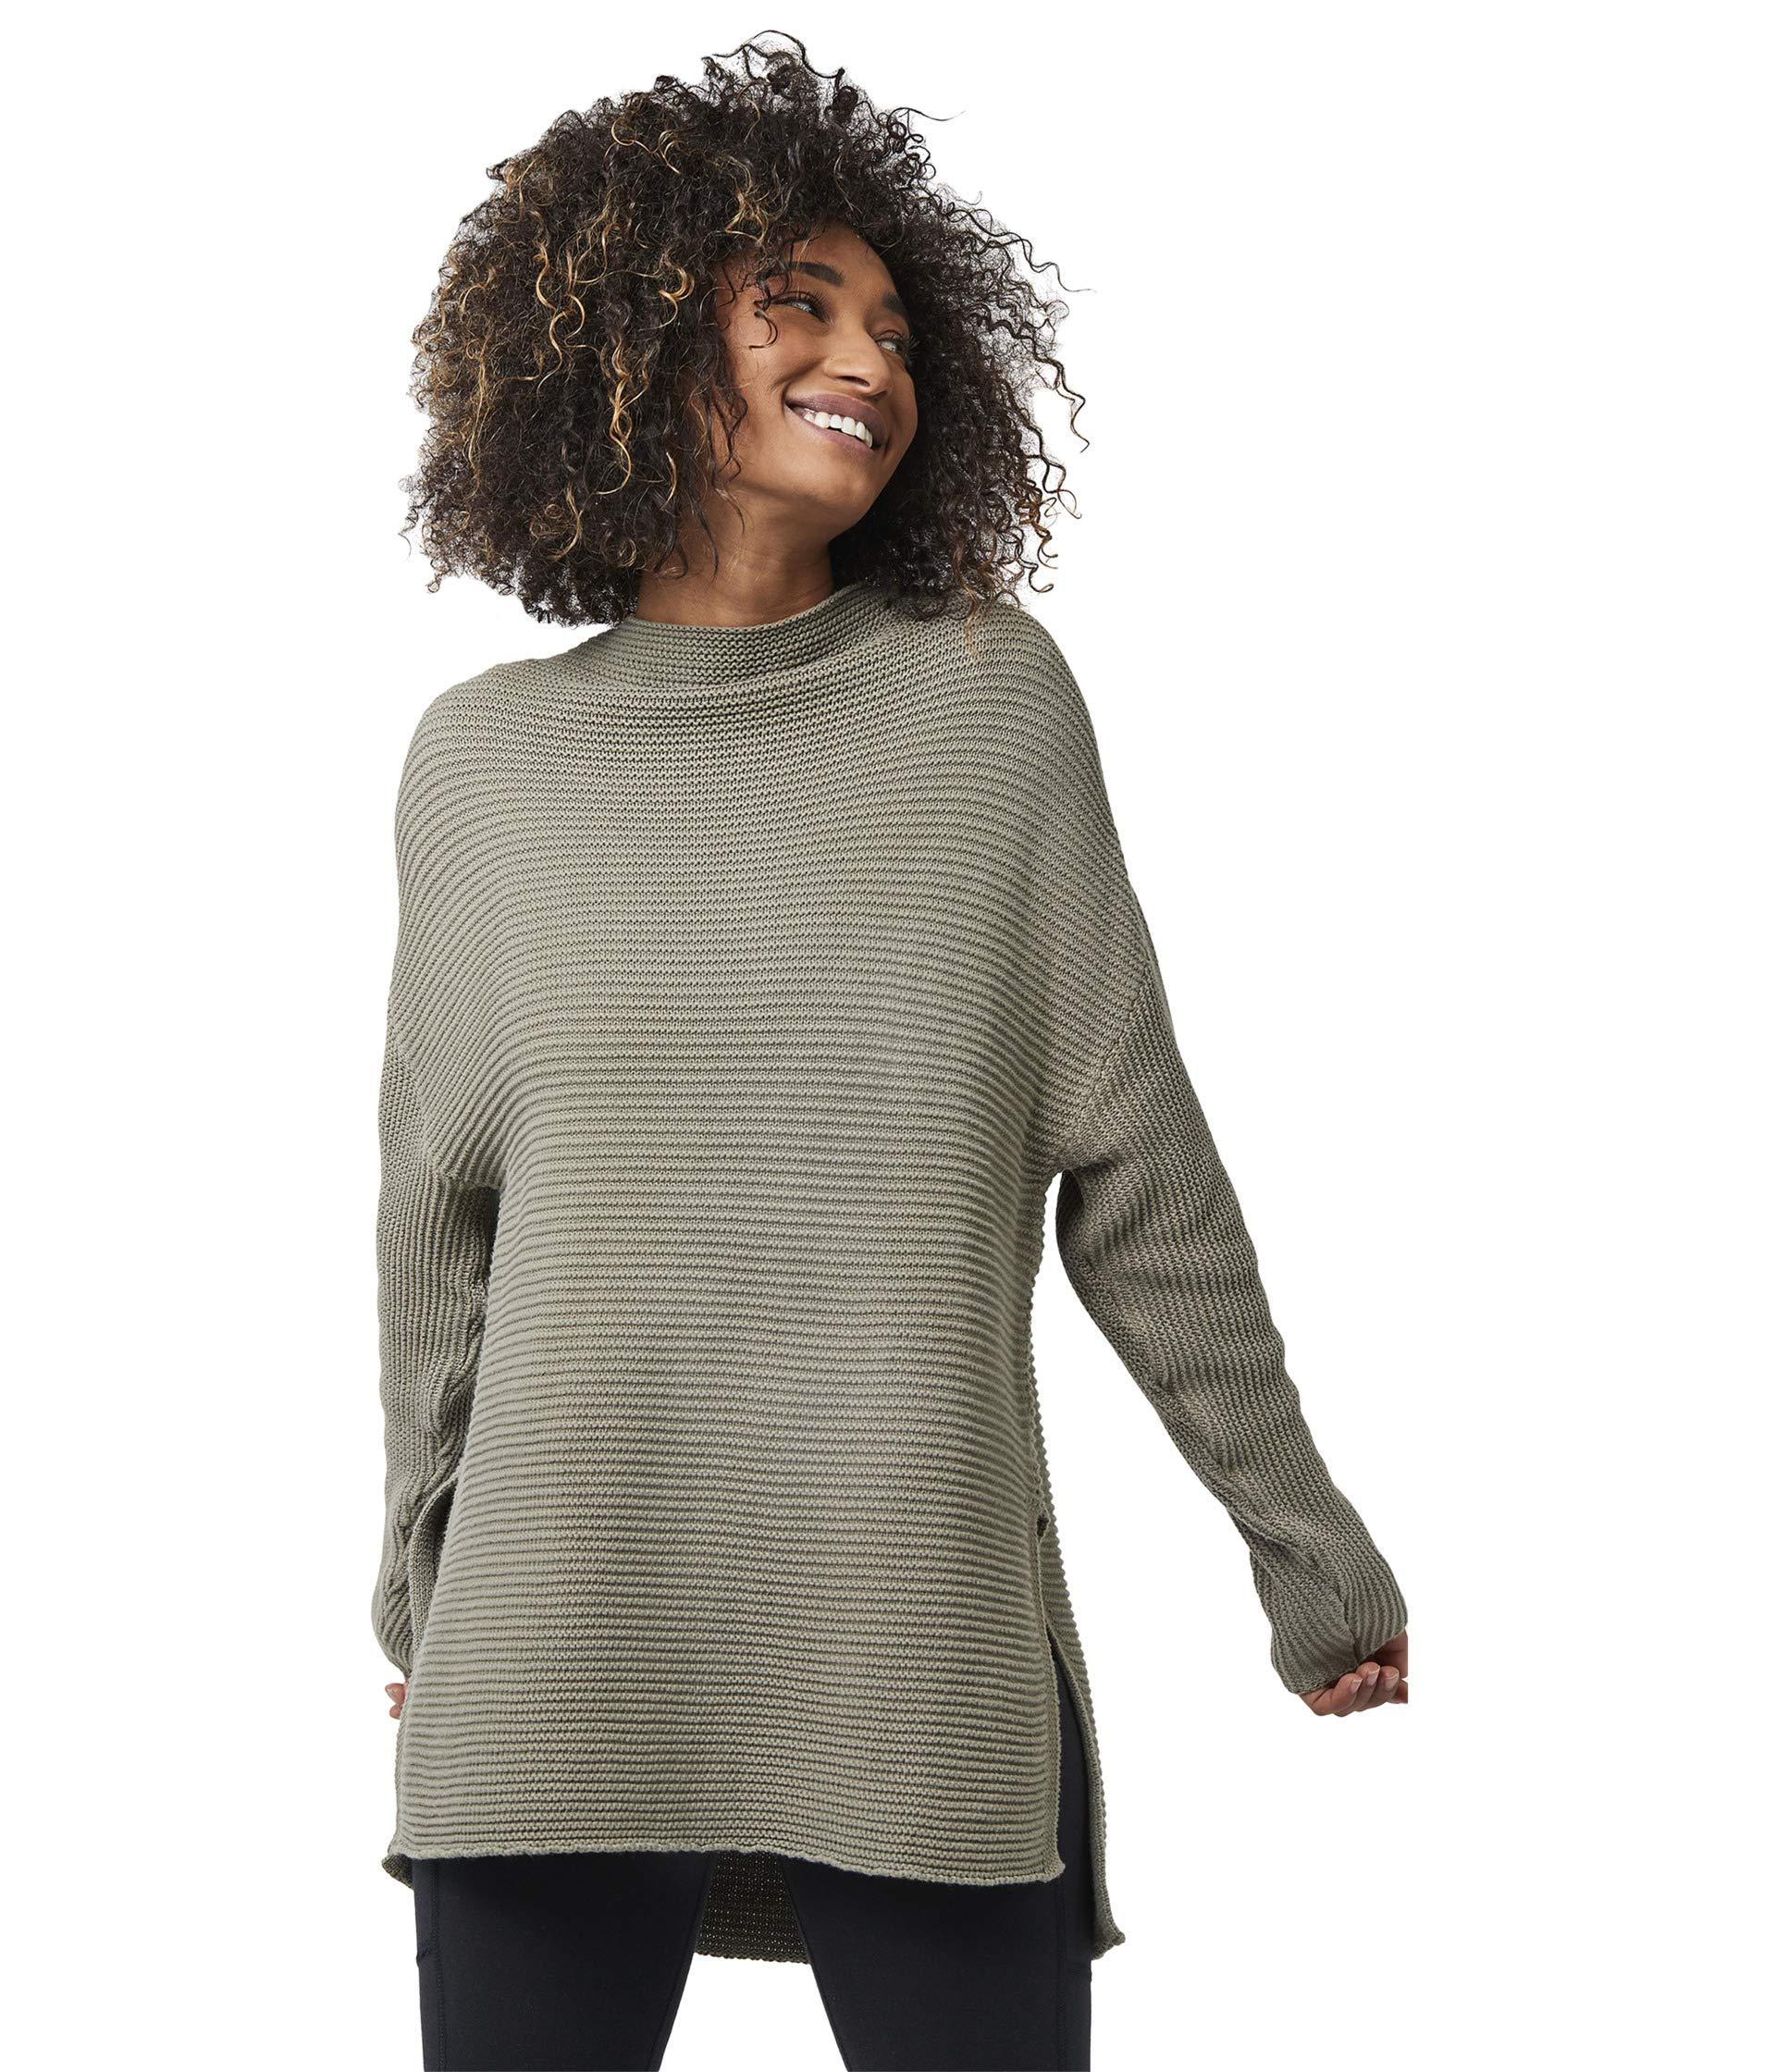 https://cdna.lystit.com/photos/zappos/2beef29c/pact-Gray-Organic-Cotton-Sweater-Tunic-Clothing.jpeg